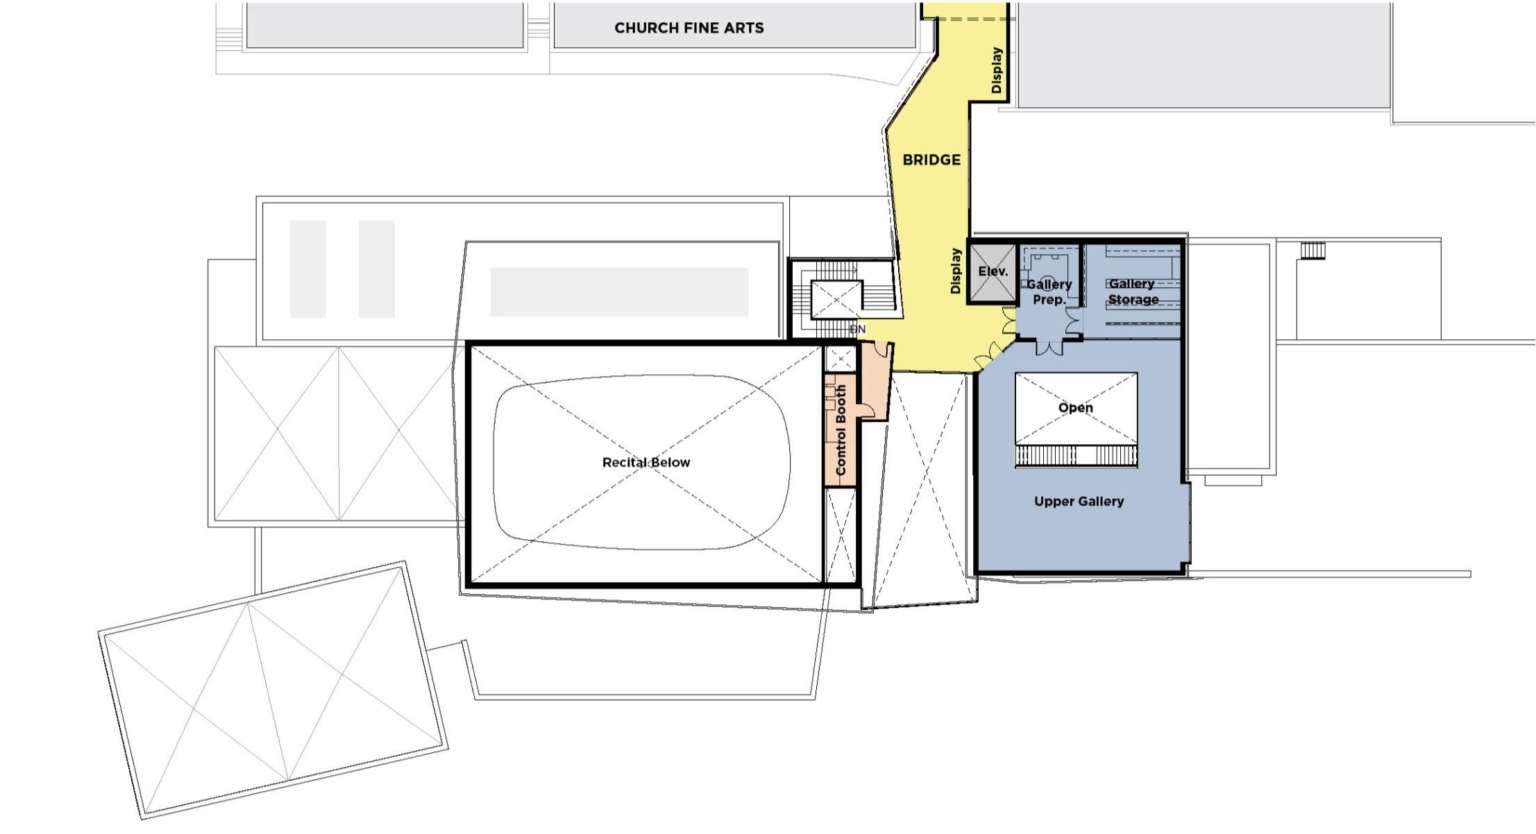 Floorplan showing lobby, recital hall, art gallery, and bridge at the University of Nevada Reno University Arts Building